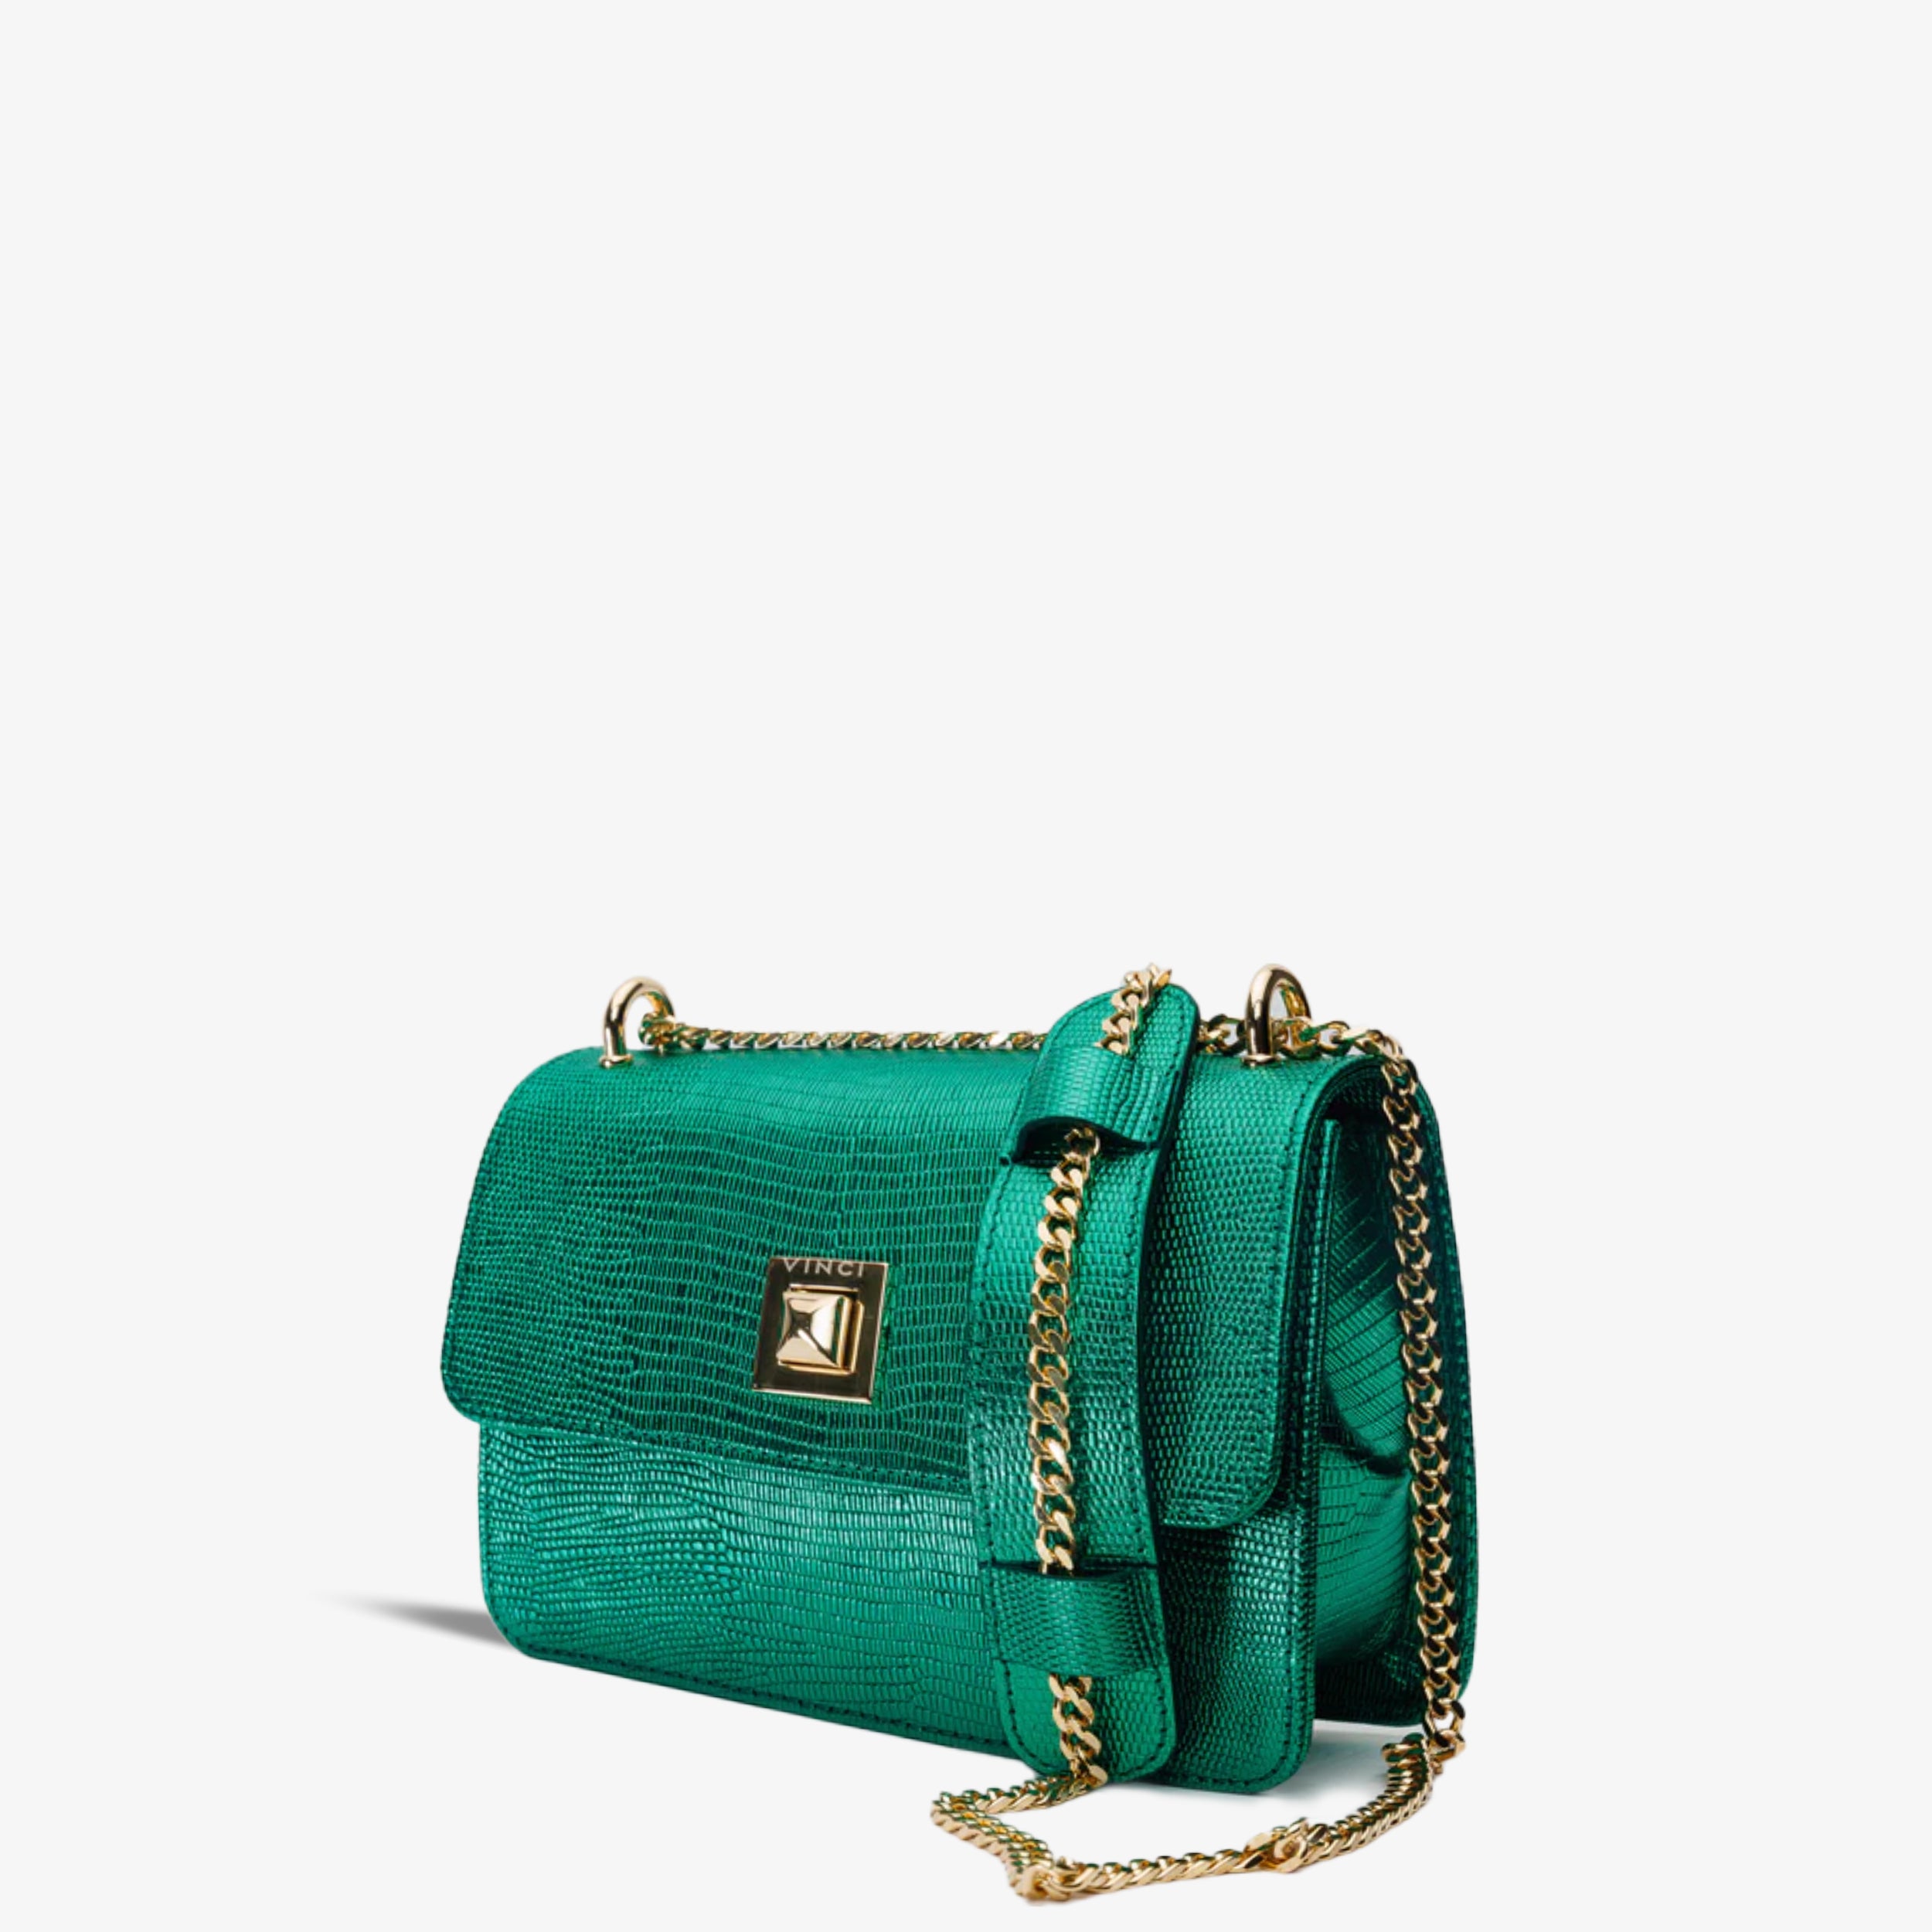 The Maple Green Leather Handbag